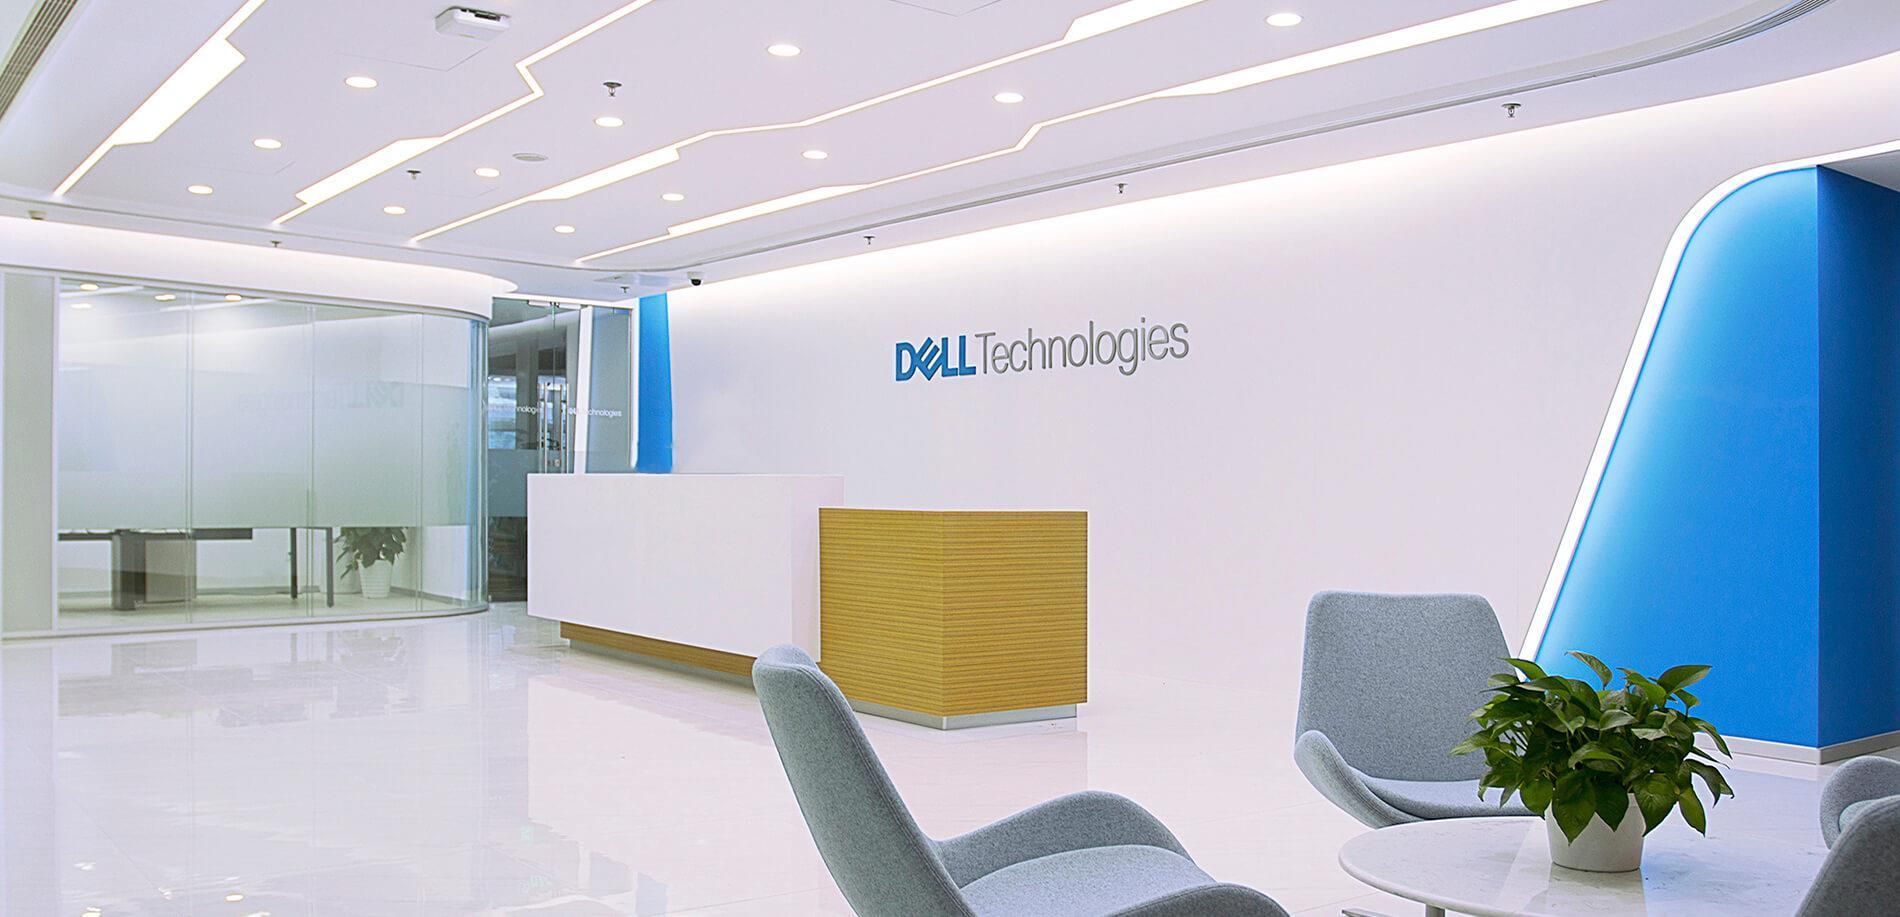 Кризис не отступает: Dell тоже сокращает количество работников